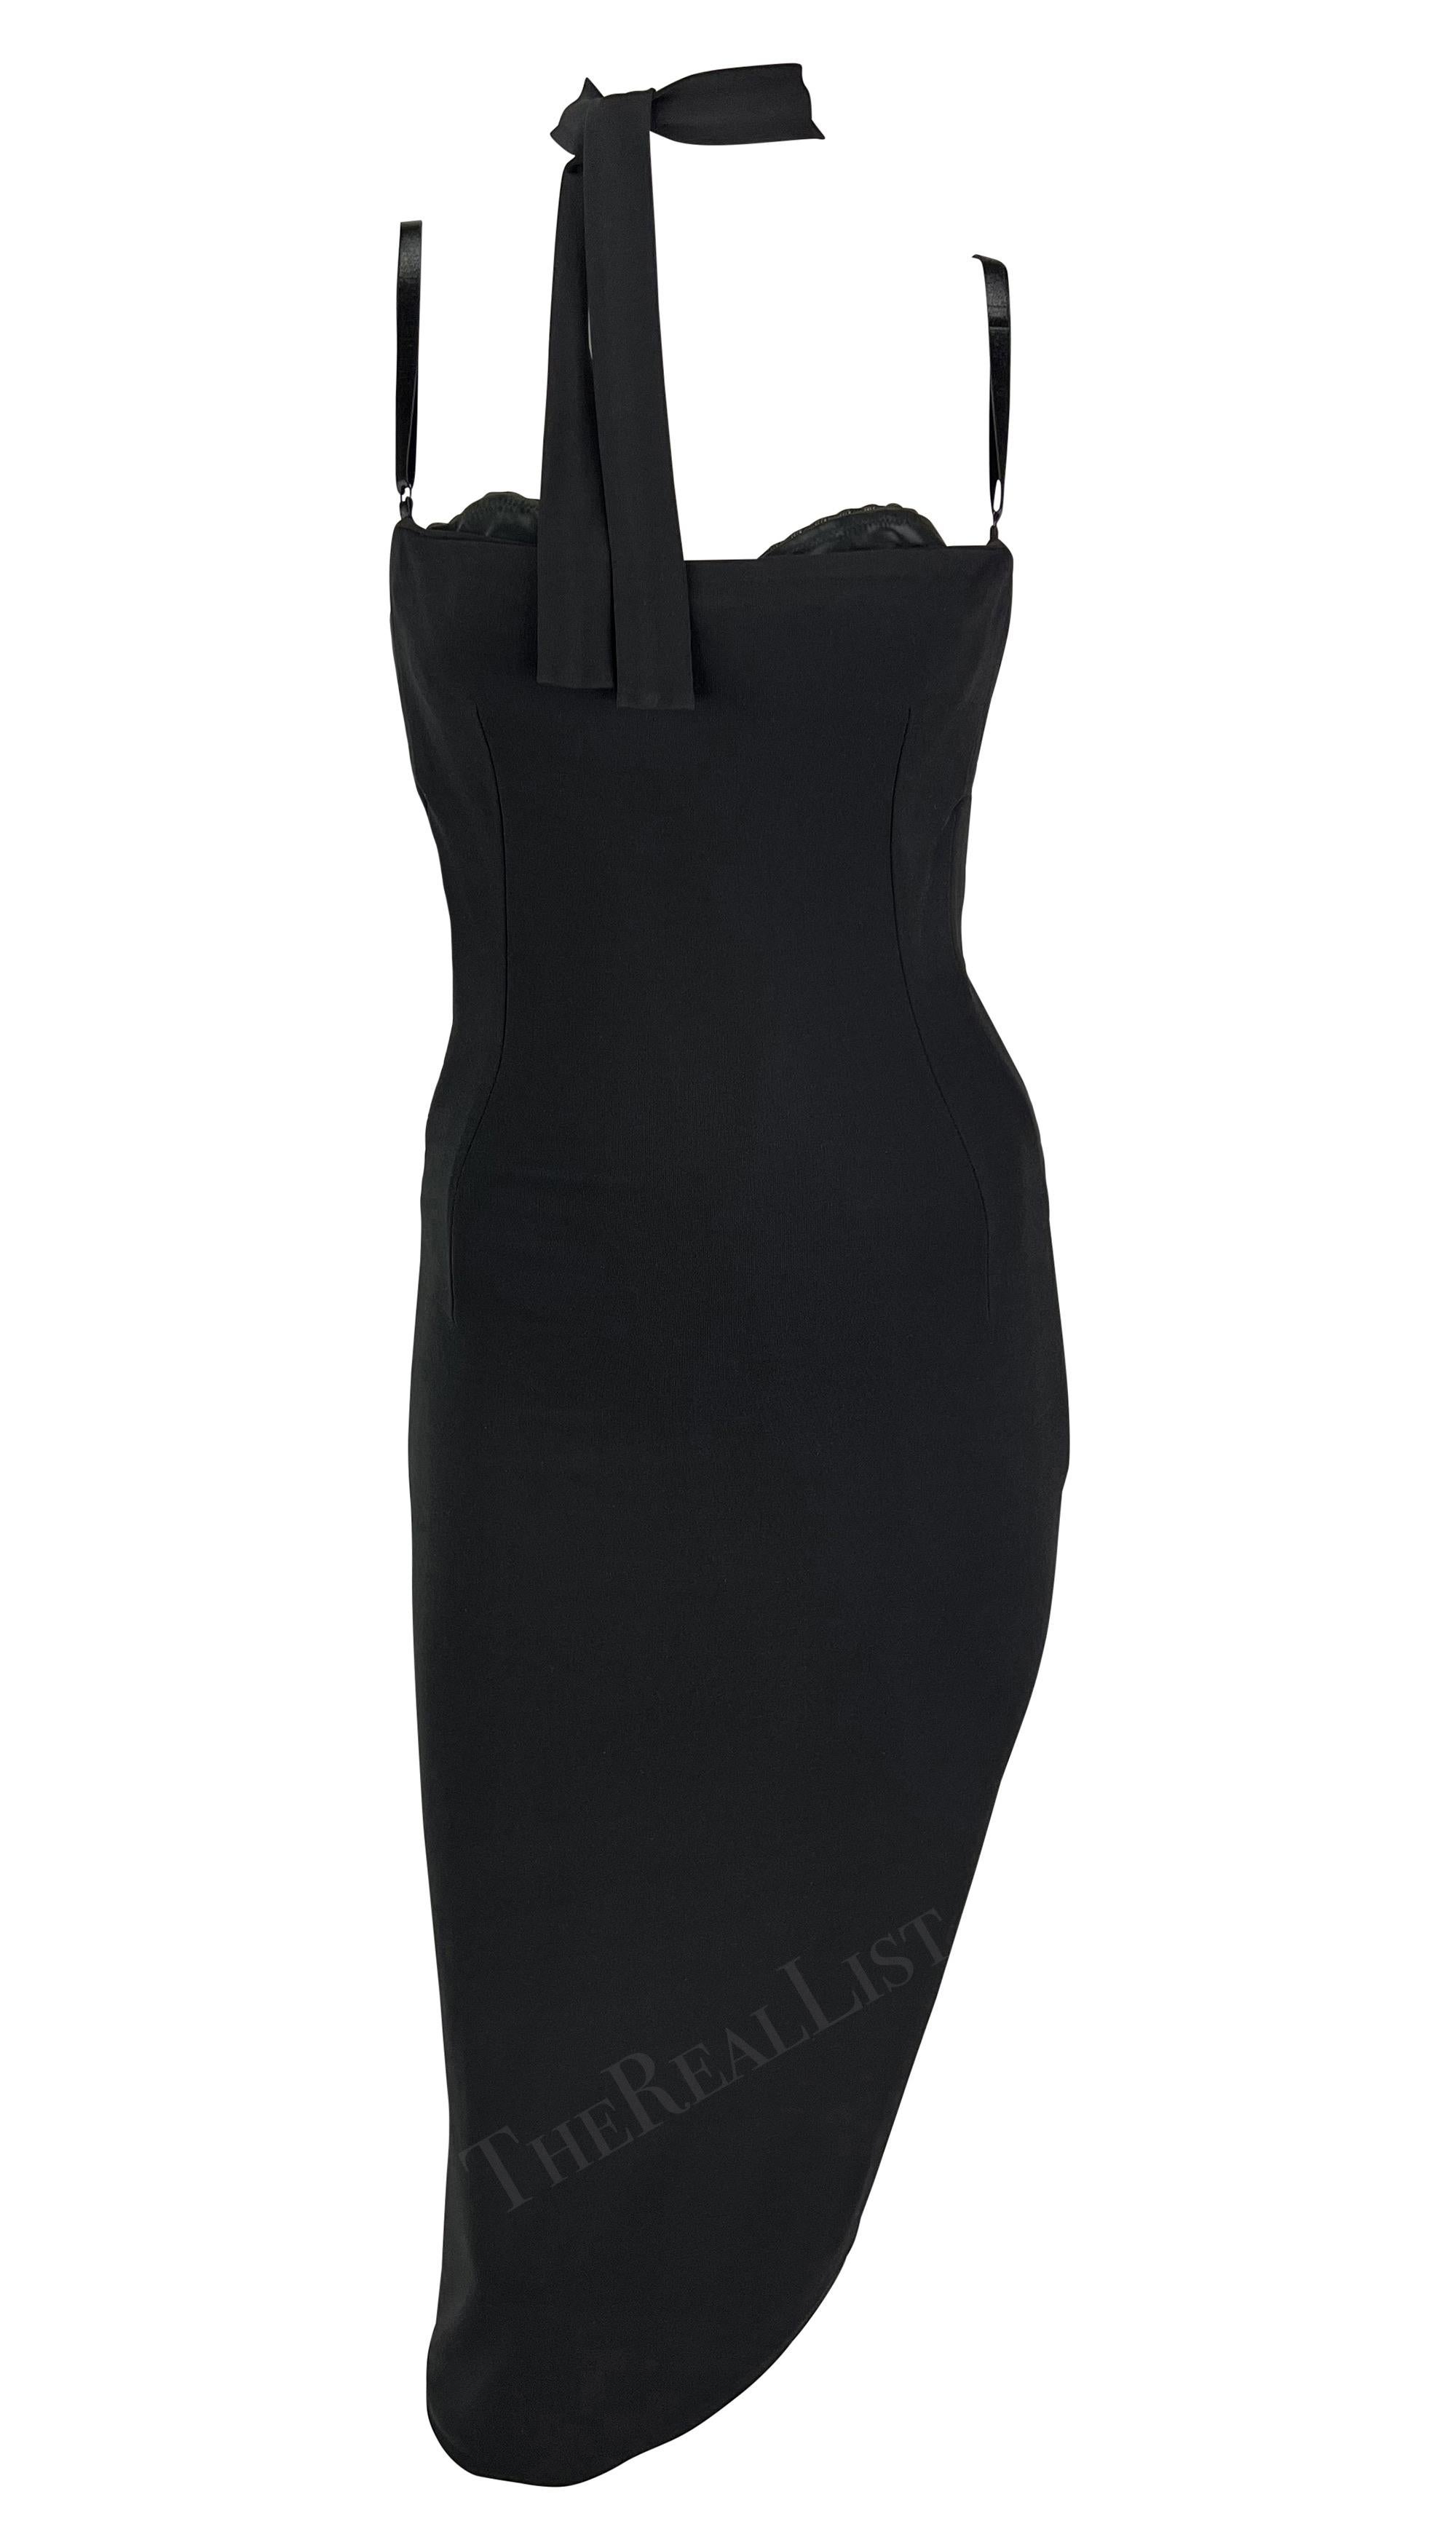 S/S 2001 Dolce & Gabbana Black Bodycon Strap Backless Runway Dress For Sale 5